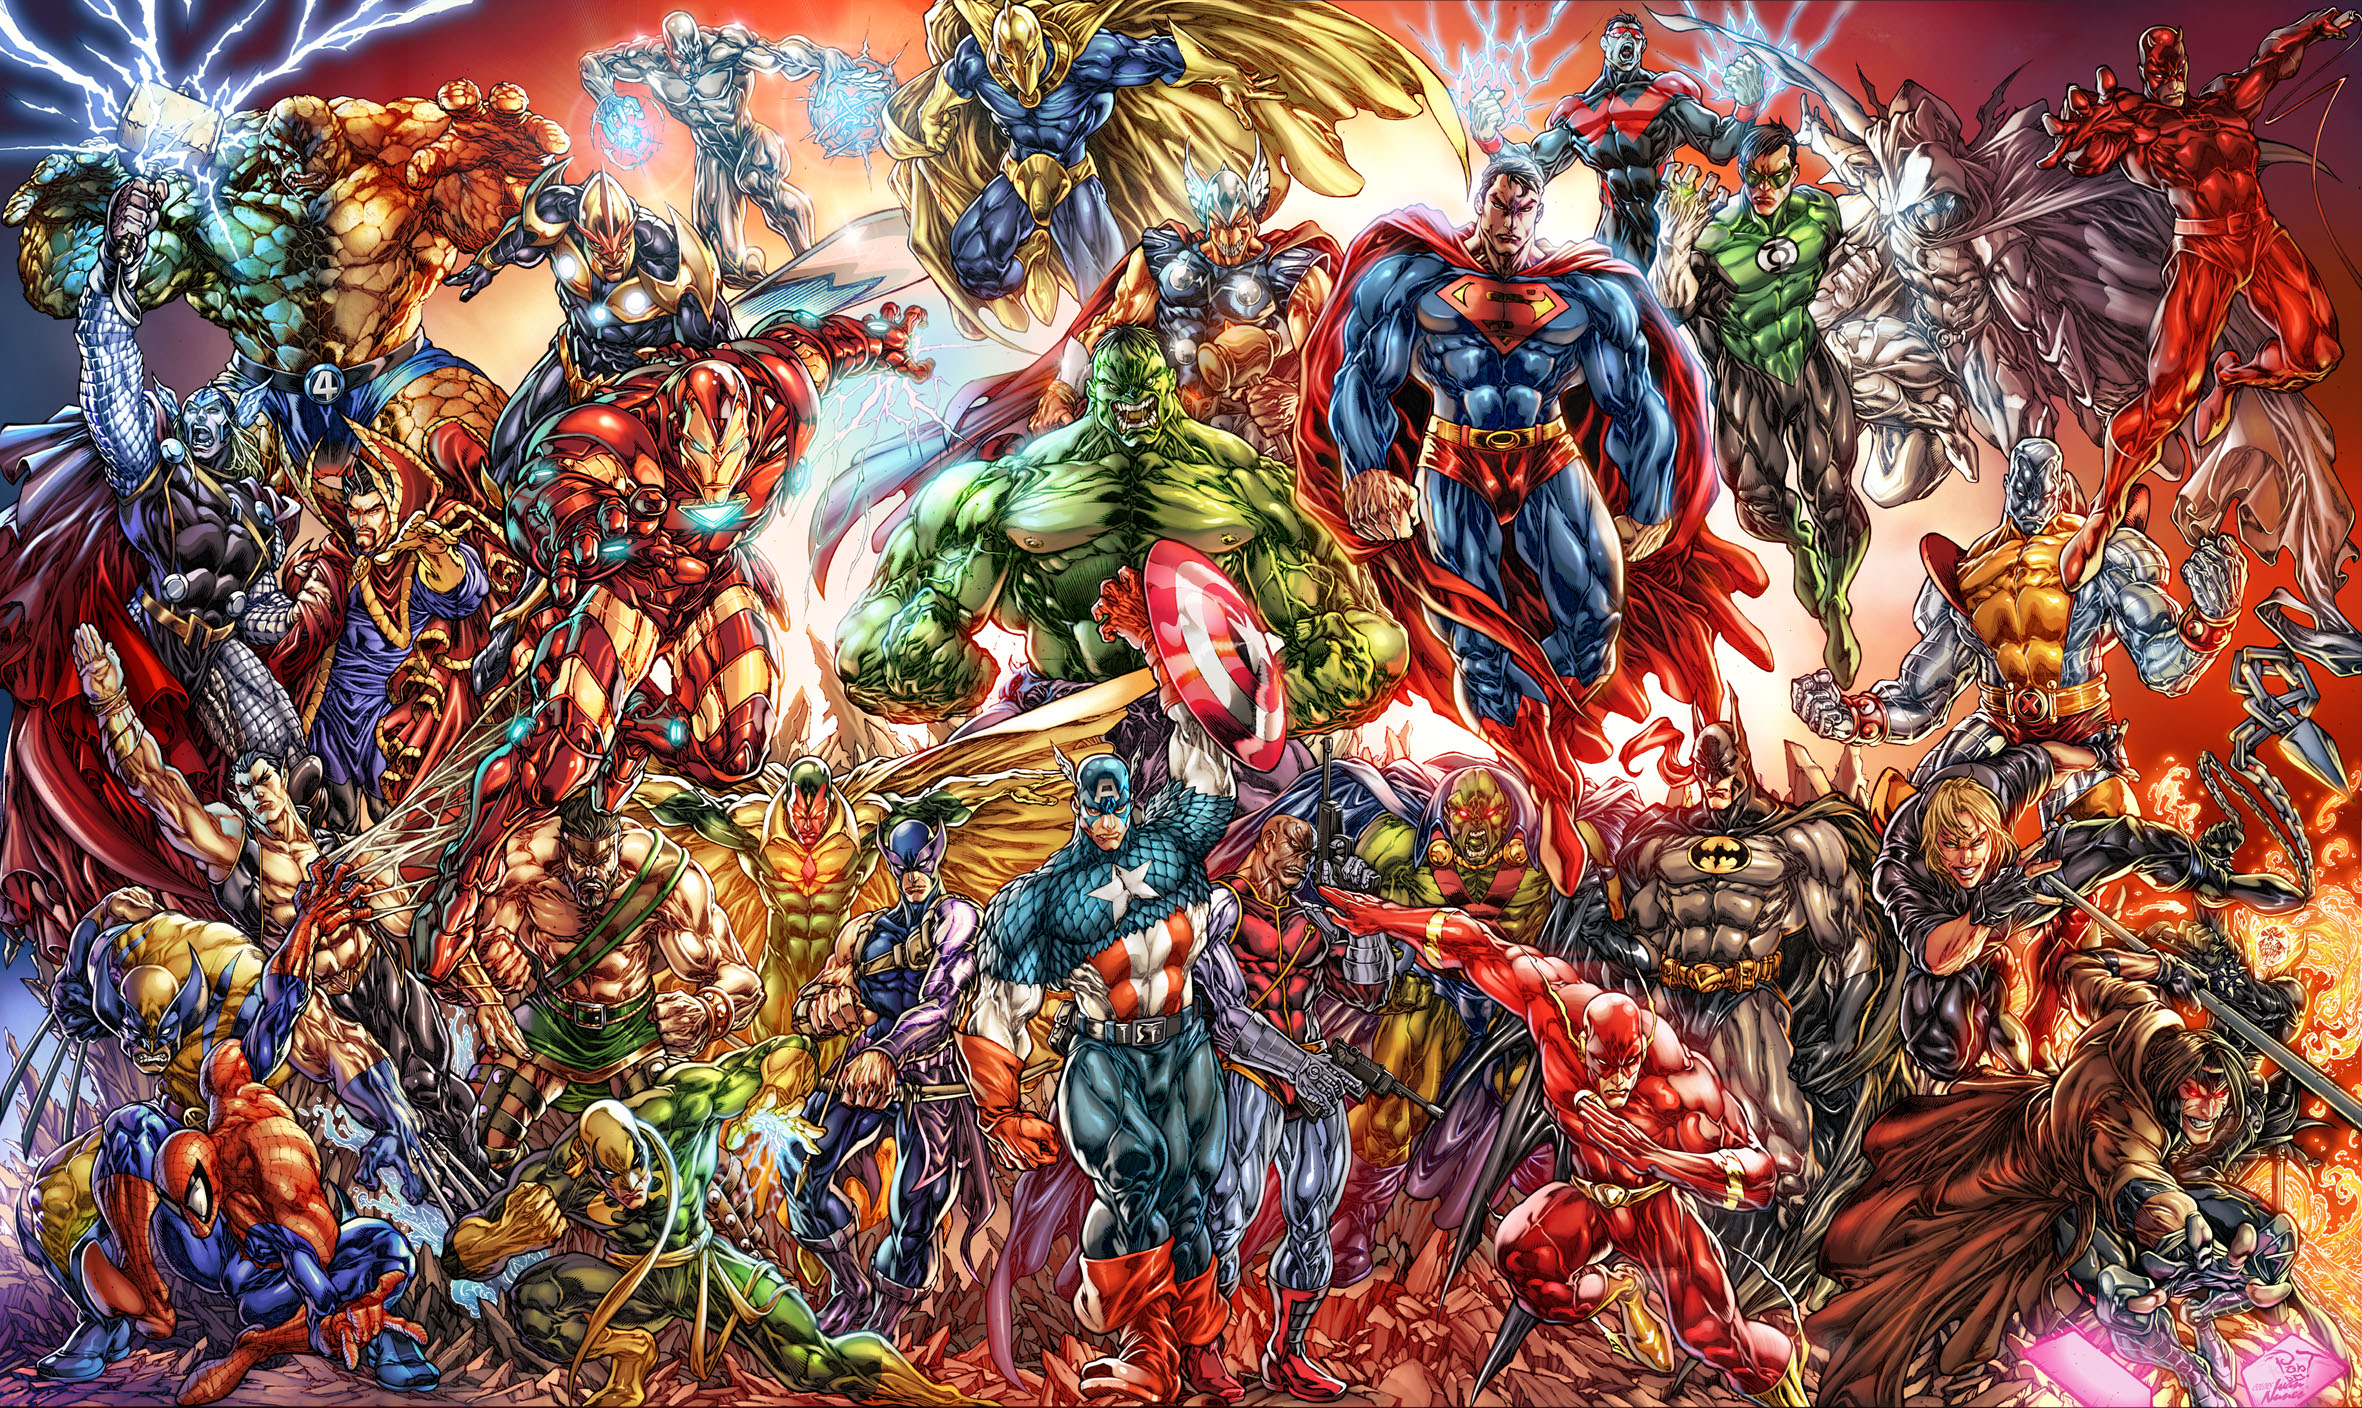 hal jordan, superman, martian manhunter, batman, spider man, daredevil, dc comics, hulk, comics, collage, barry allen, wolverine, ghost rider, ben grimm, beta ray bill, captain america, clint barton, colossus, danny rand, deathlok, doctor fate (dc comics), doctor strange, flash, gambit (marvel comics), green lantern, hawkeye, hercules (marvel comics), iron fist (marvel comics), iron man, j'onn j'onzz, longshot (marvel comics), moon knight, namor the sub mariner, nightwing, nova (marvel comics), peter parker, silver surfer, sub mariner, thing (marvel comics), thor, vision (marvel comics), wonder man 4K Ultra